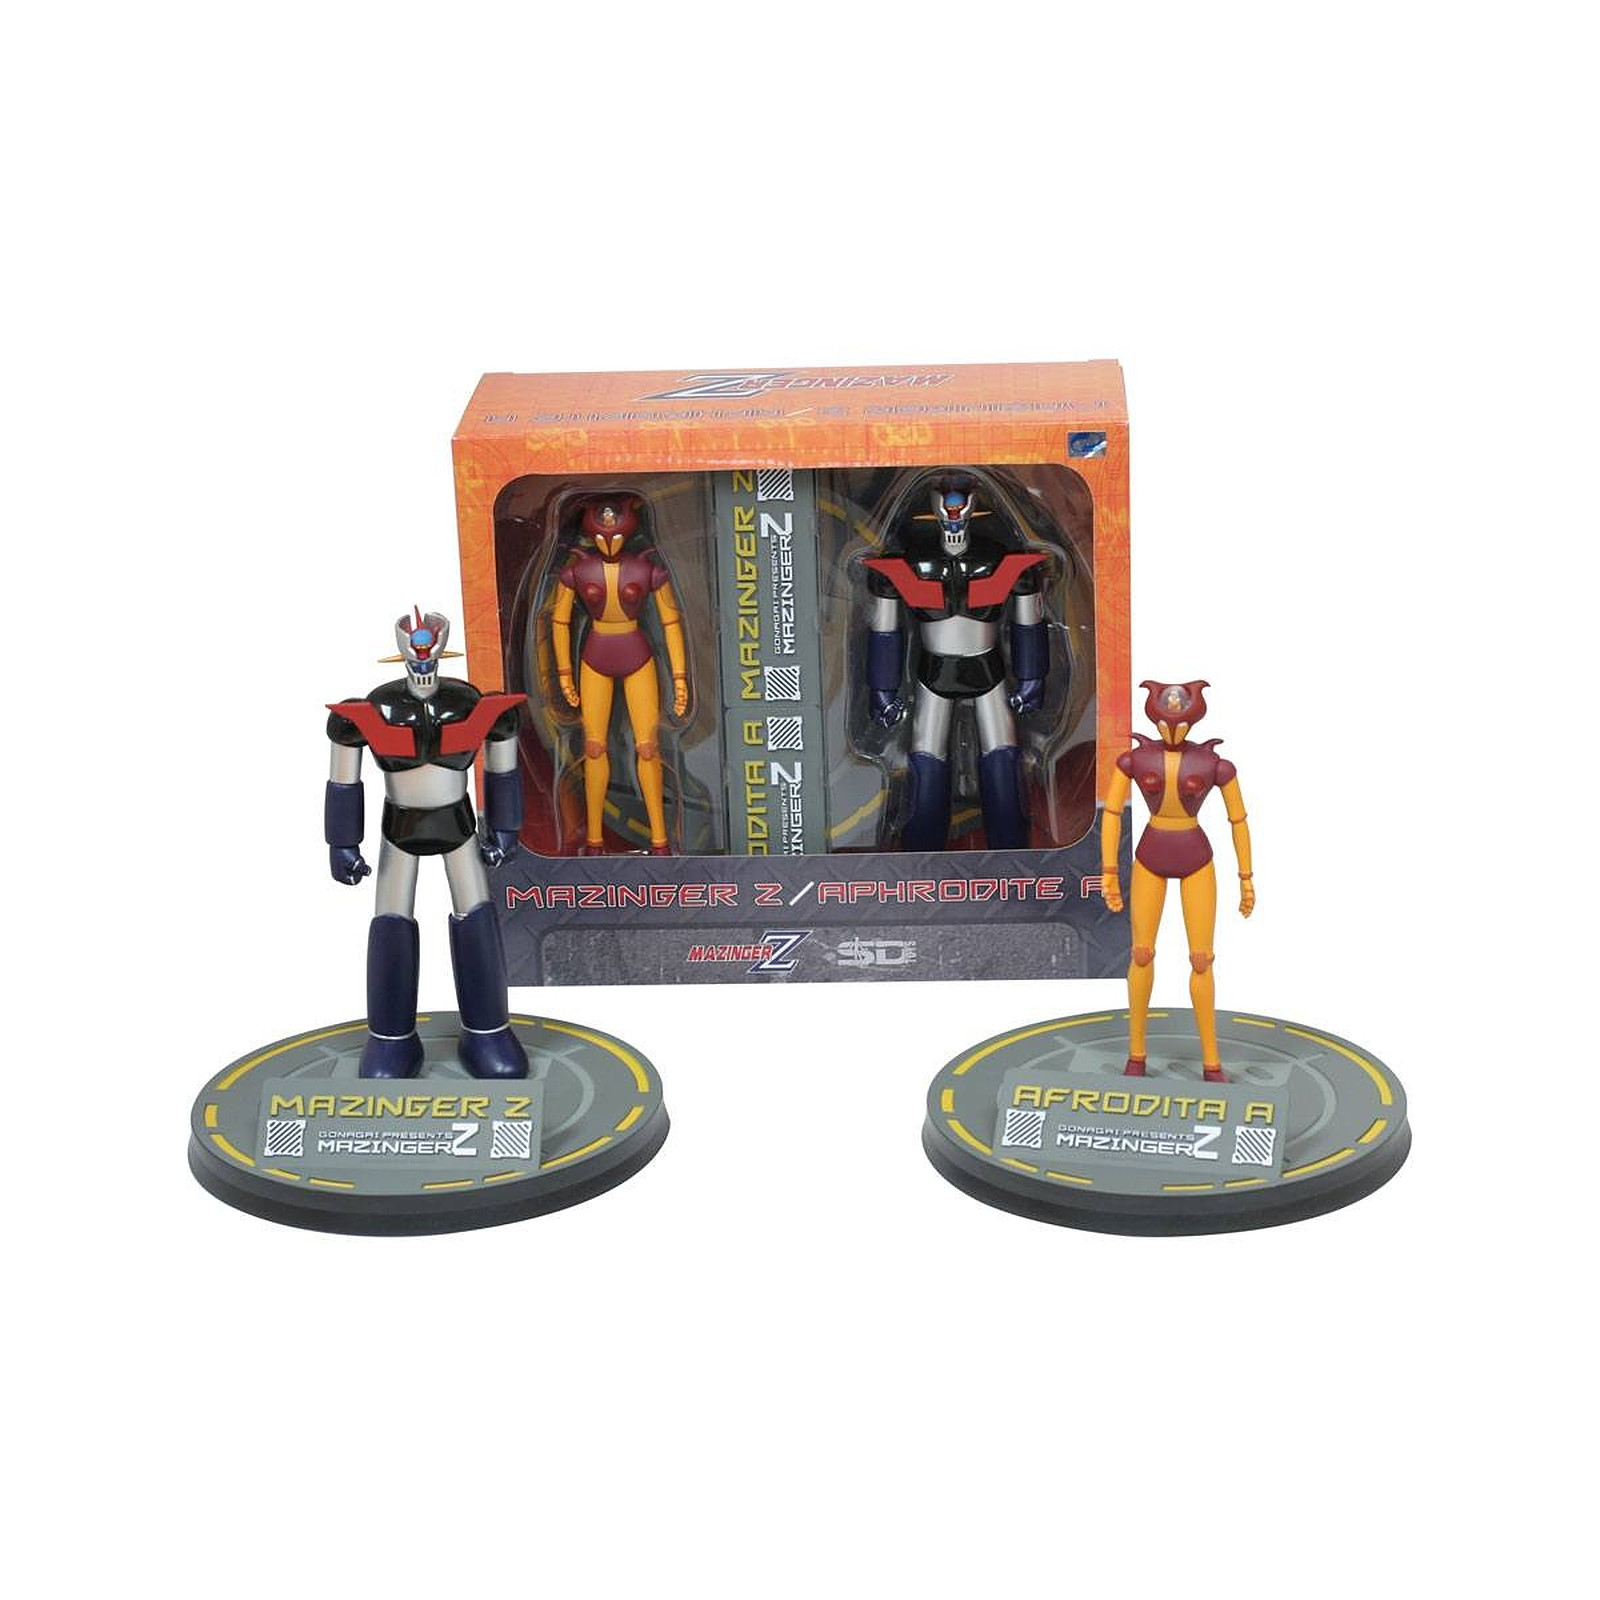 Mazinger Z - Pack 2 figurines Mazinger Z & Afrodita A 15 - 18 cm - Figurines SD Toys